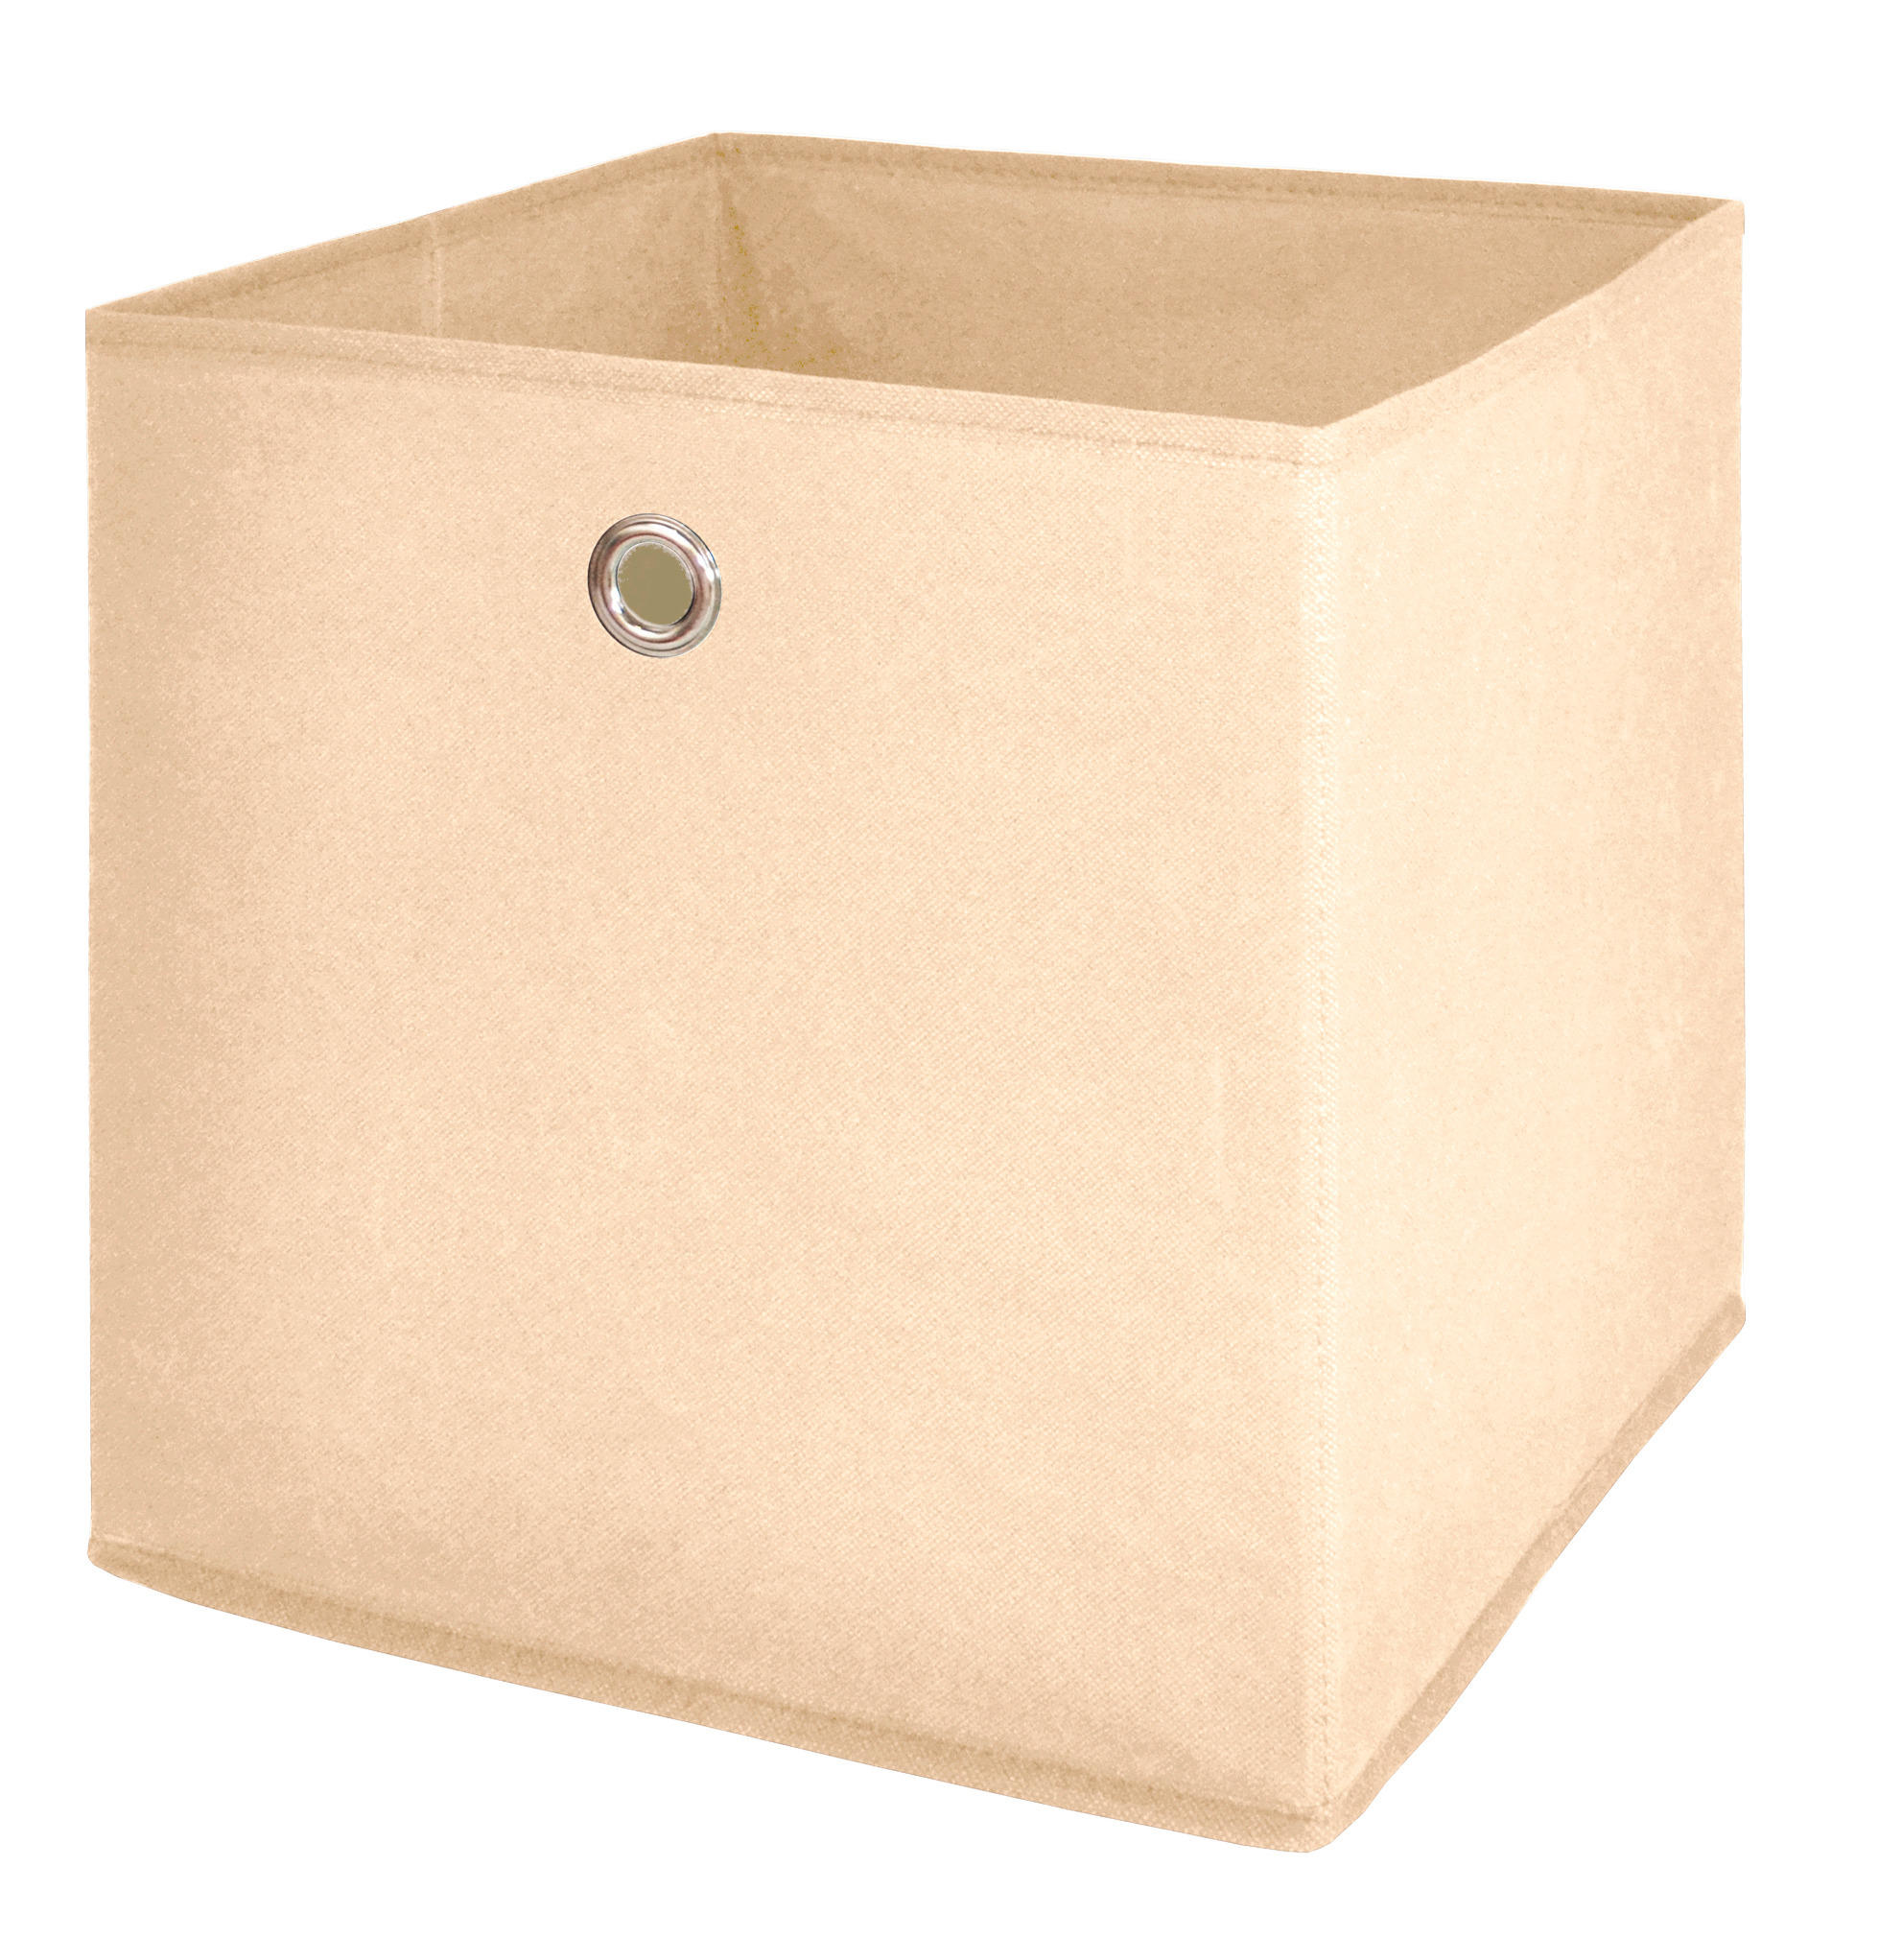 Stoffbox Beige B/h/t: Ca. 32x32x32 Cm Stoffbox_1 - beige (32,00/32,00/32,00cm)